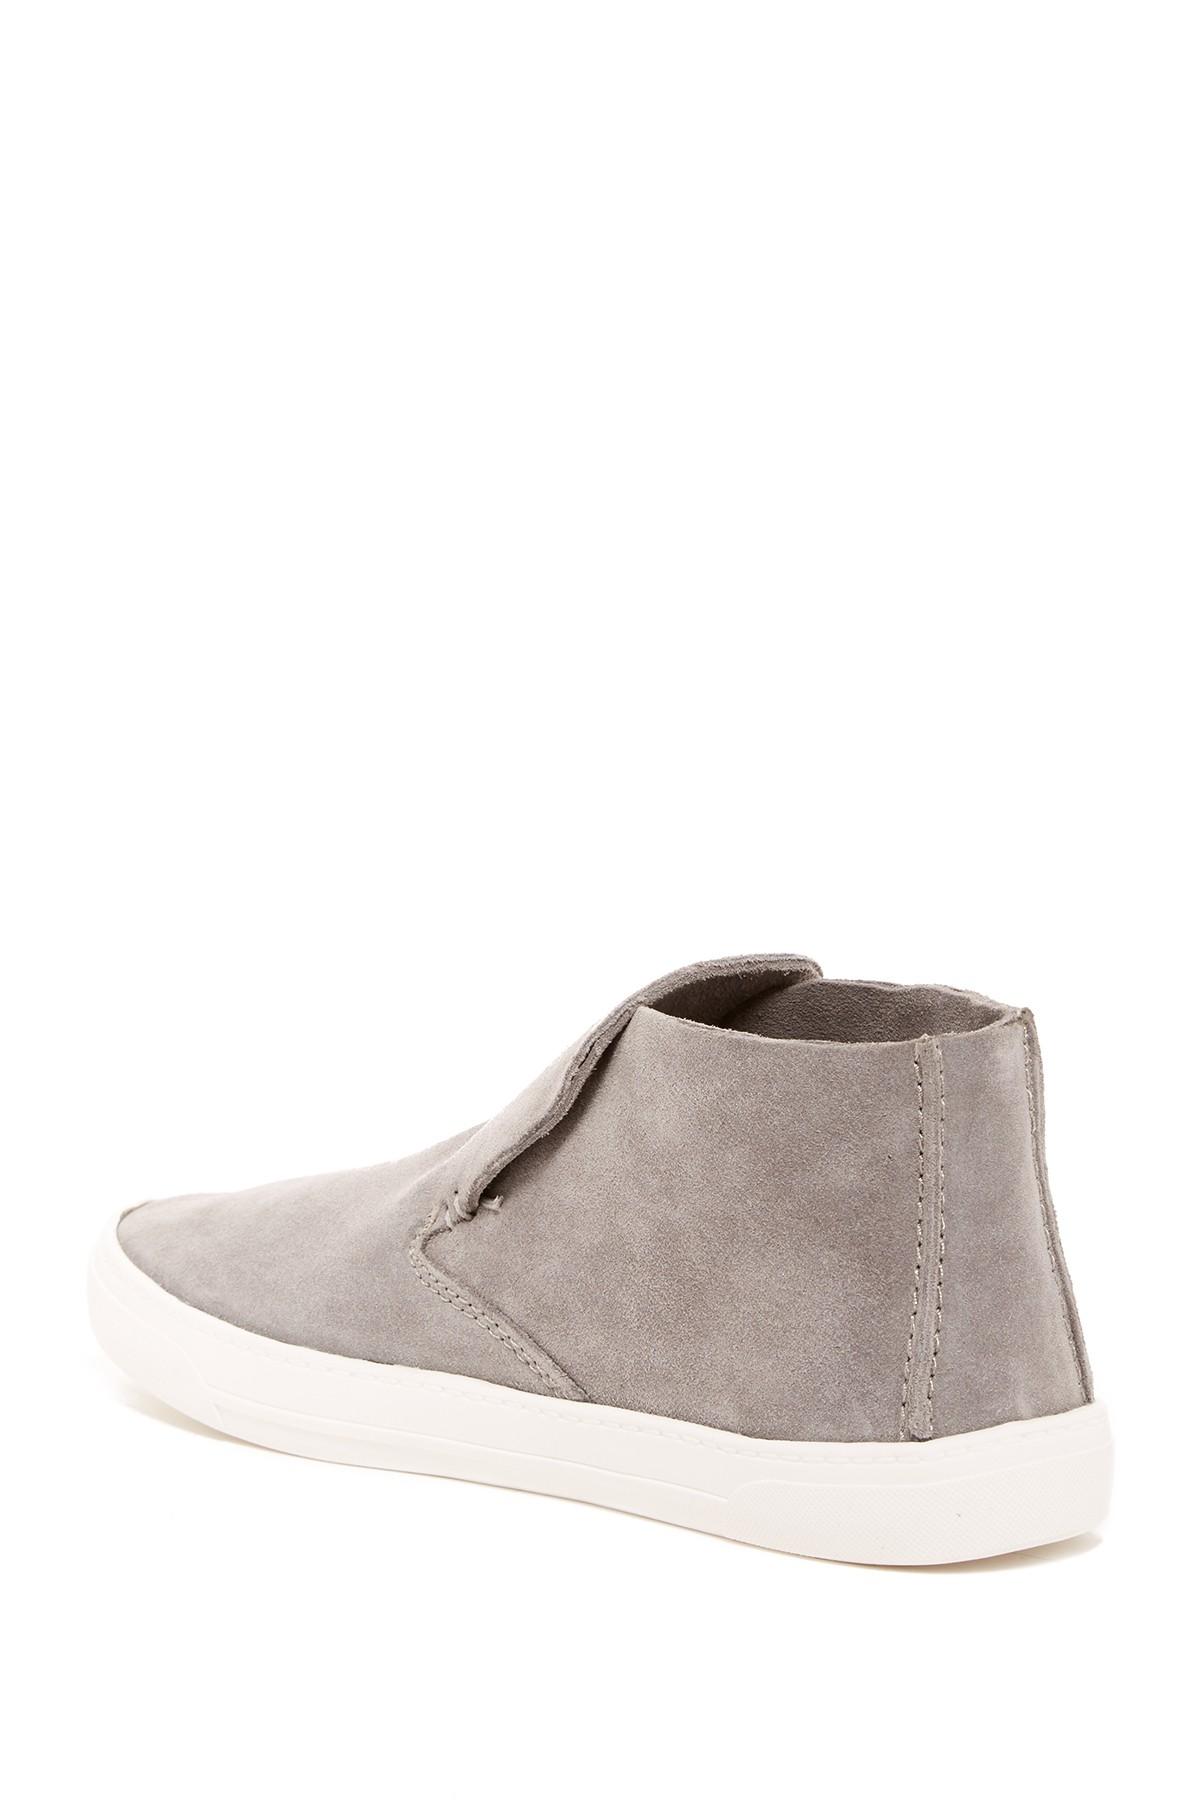 Dolce Vita Xavier Slip-on Sneaker in Gray | Lyst